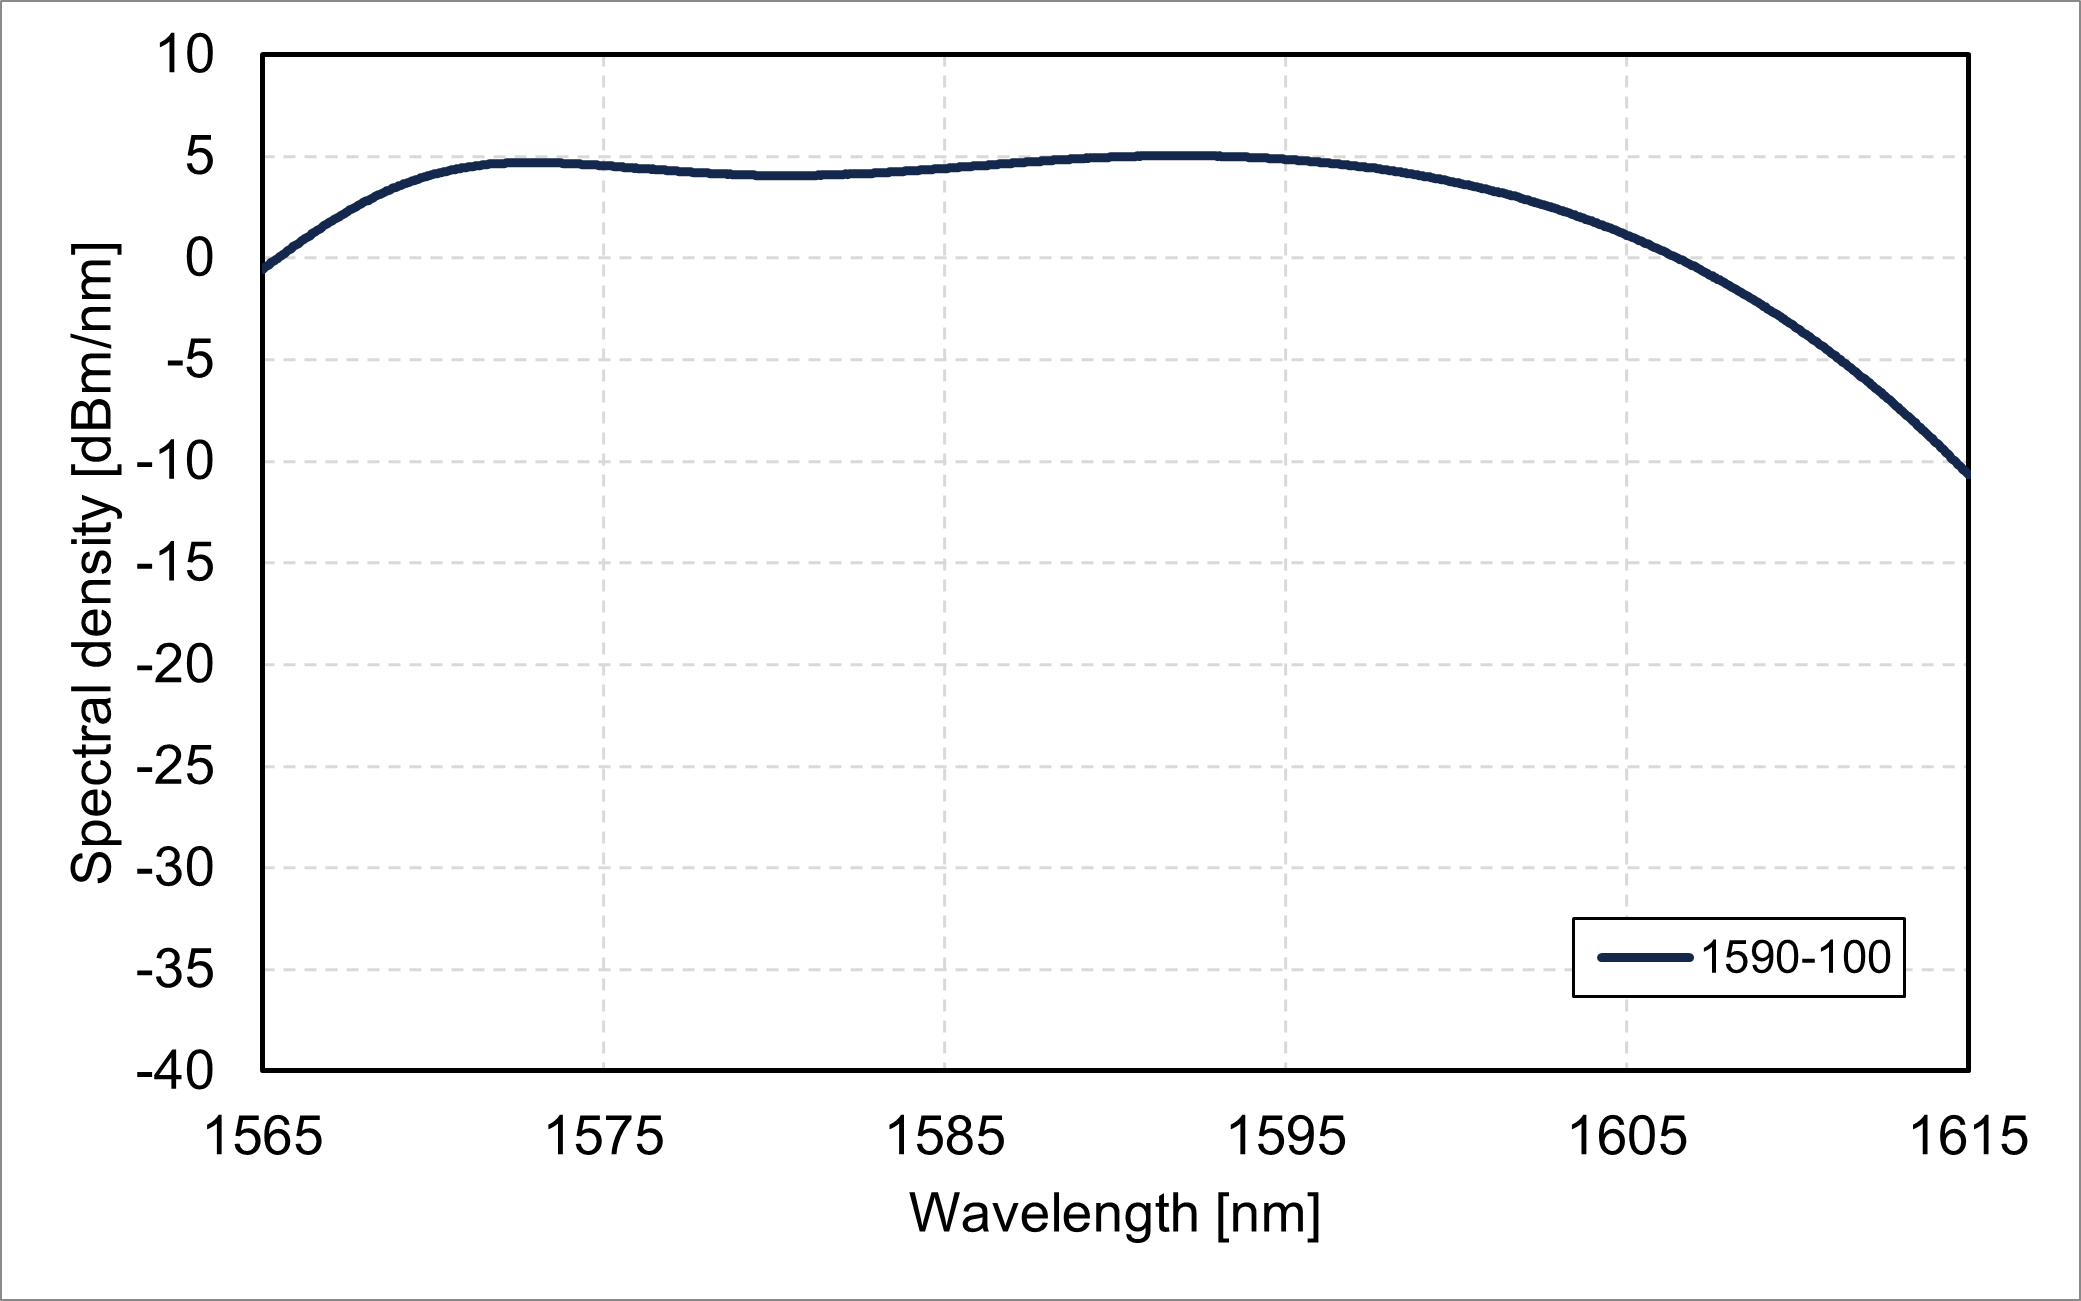 Spectral density vs. wavelength (1590-100)